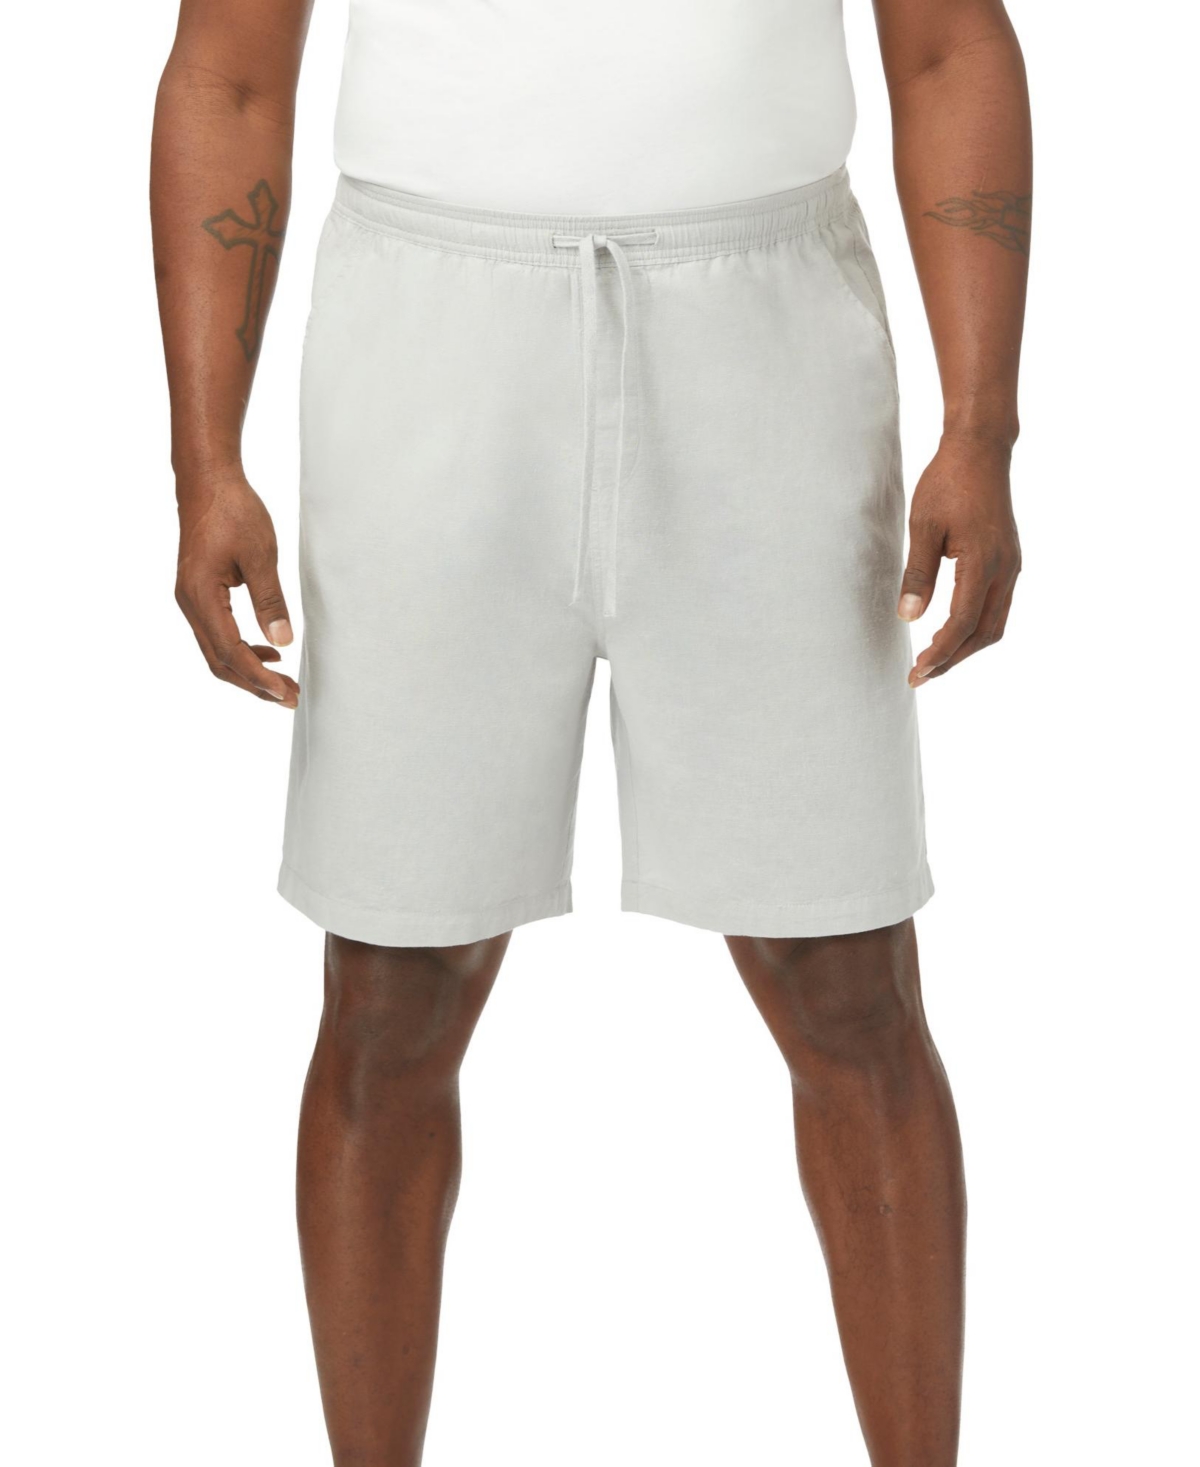 Big & Tall Plain Front Hemp Shorts - Uneven navy stripe